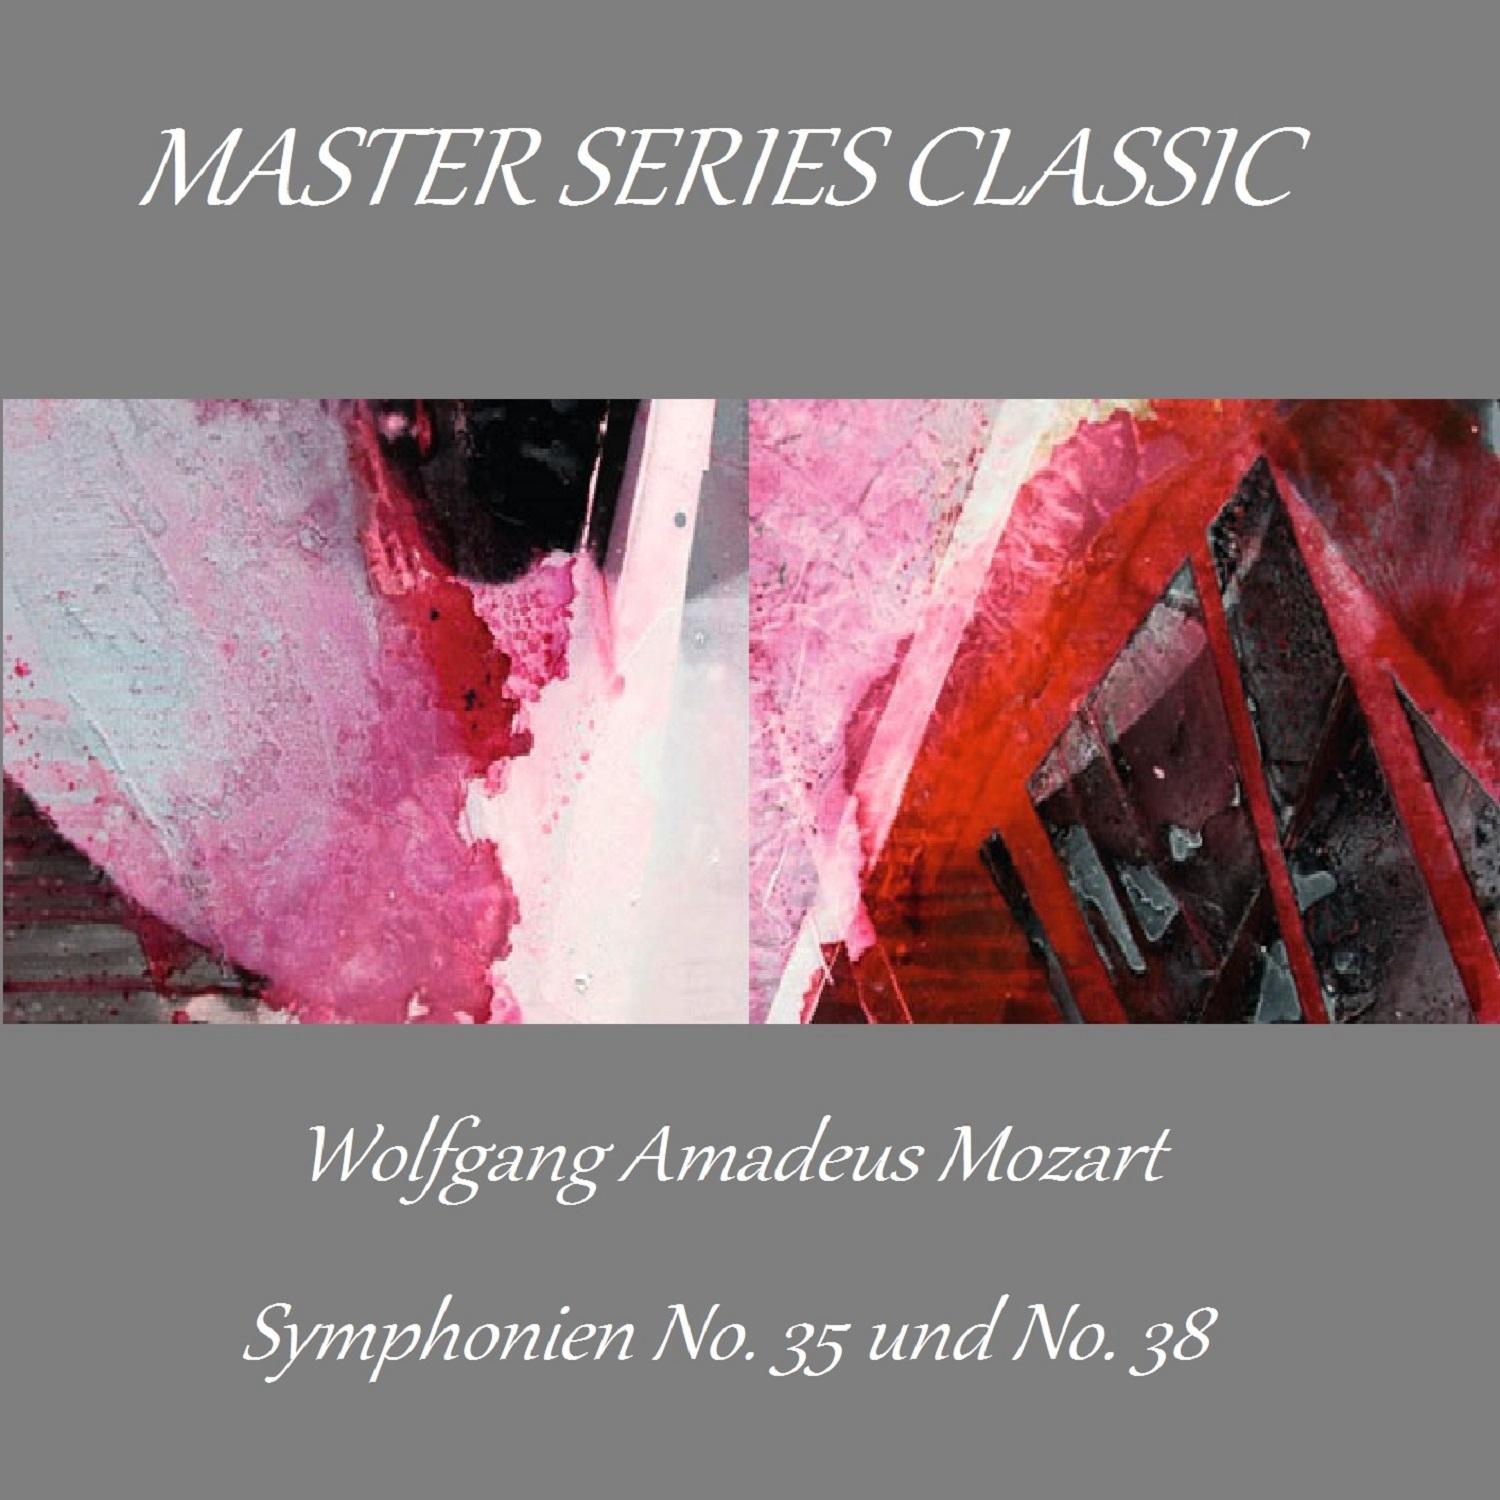 Master Series Classic - Symphonien No. 35 und No. 38